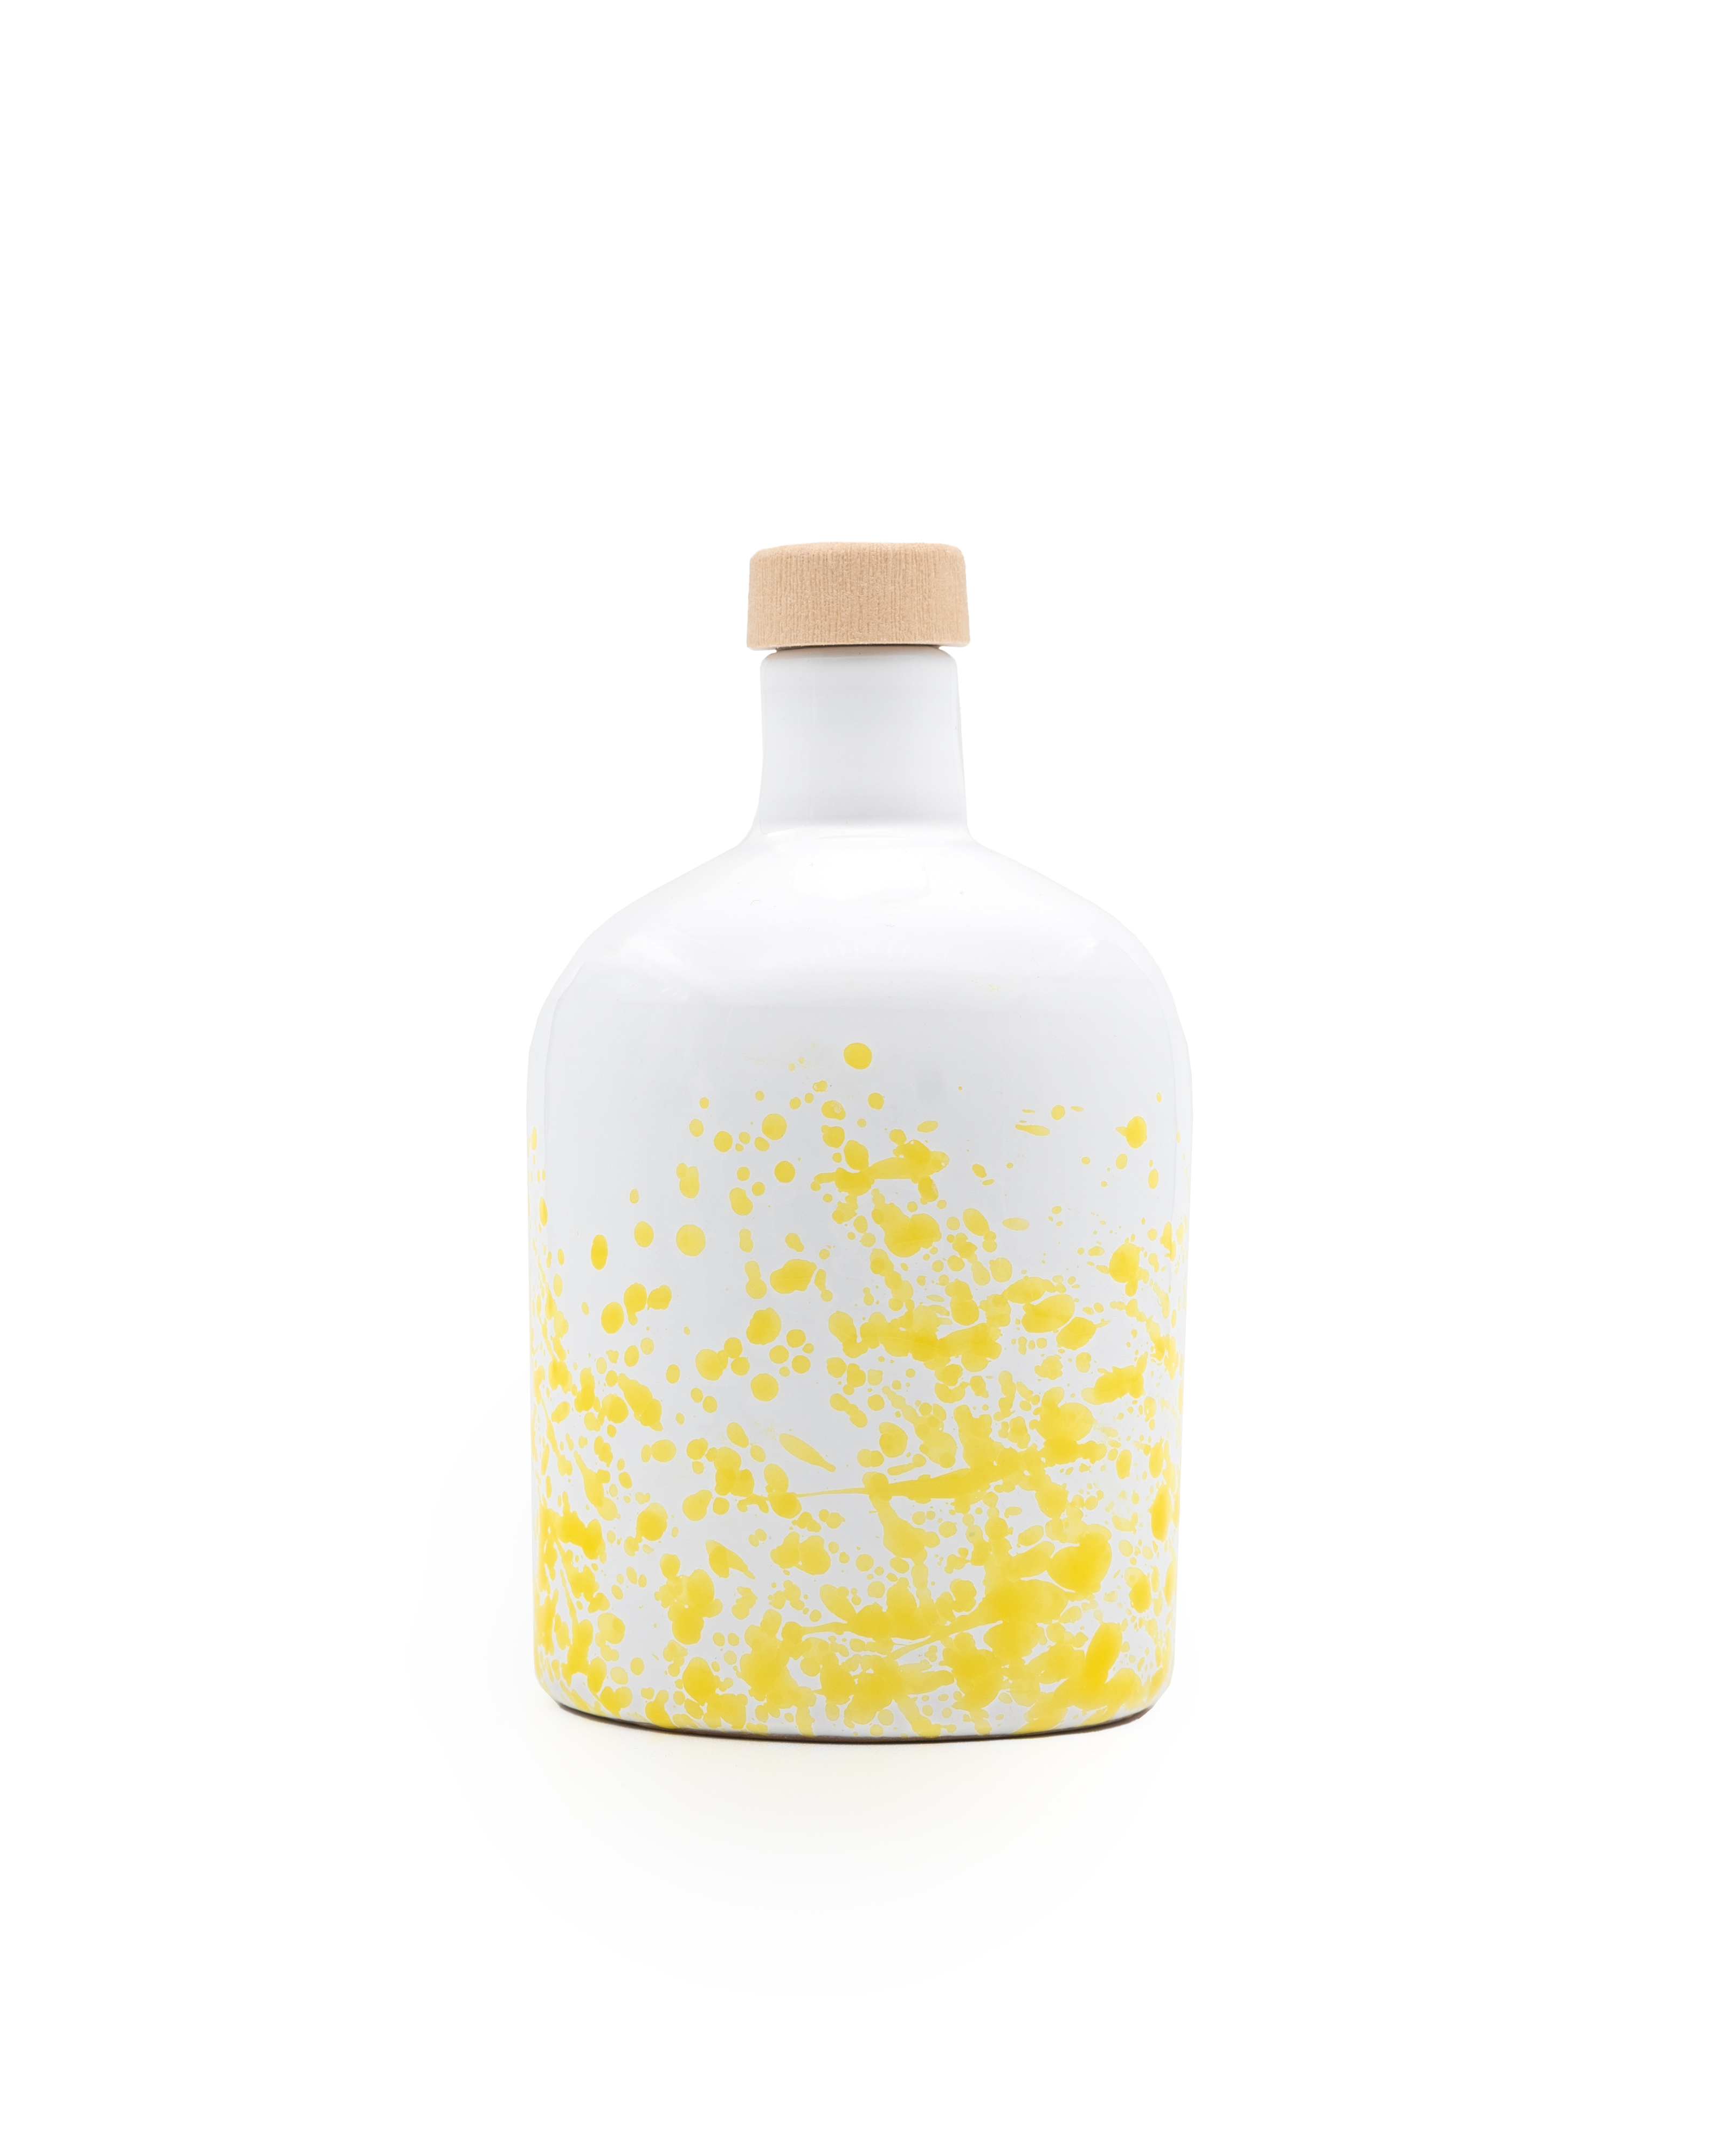 ANDANTE organic extra virgin olive oil, filtered, 250ml yellow ceramic bottle.